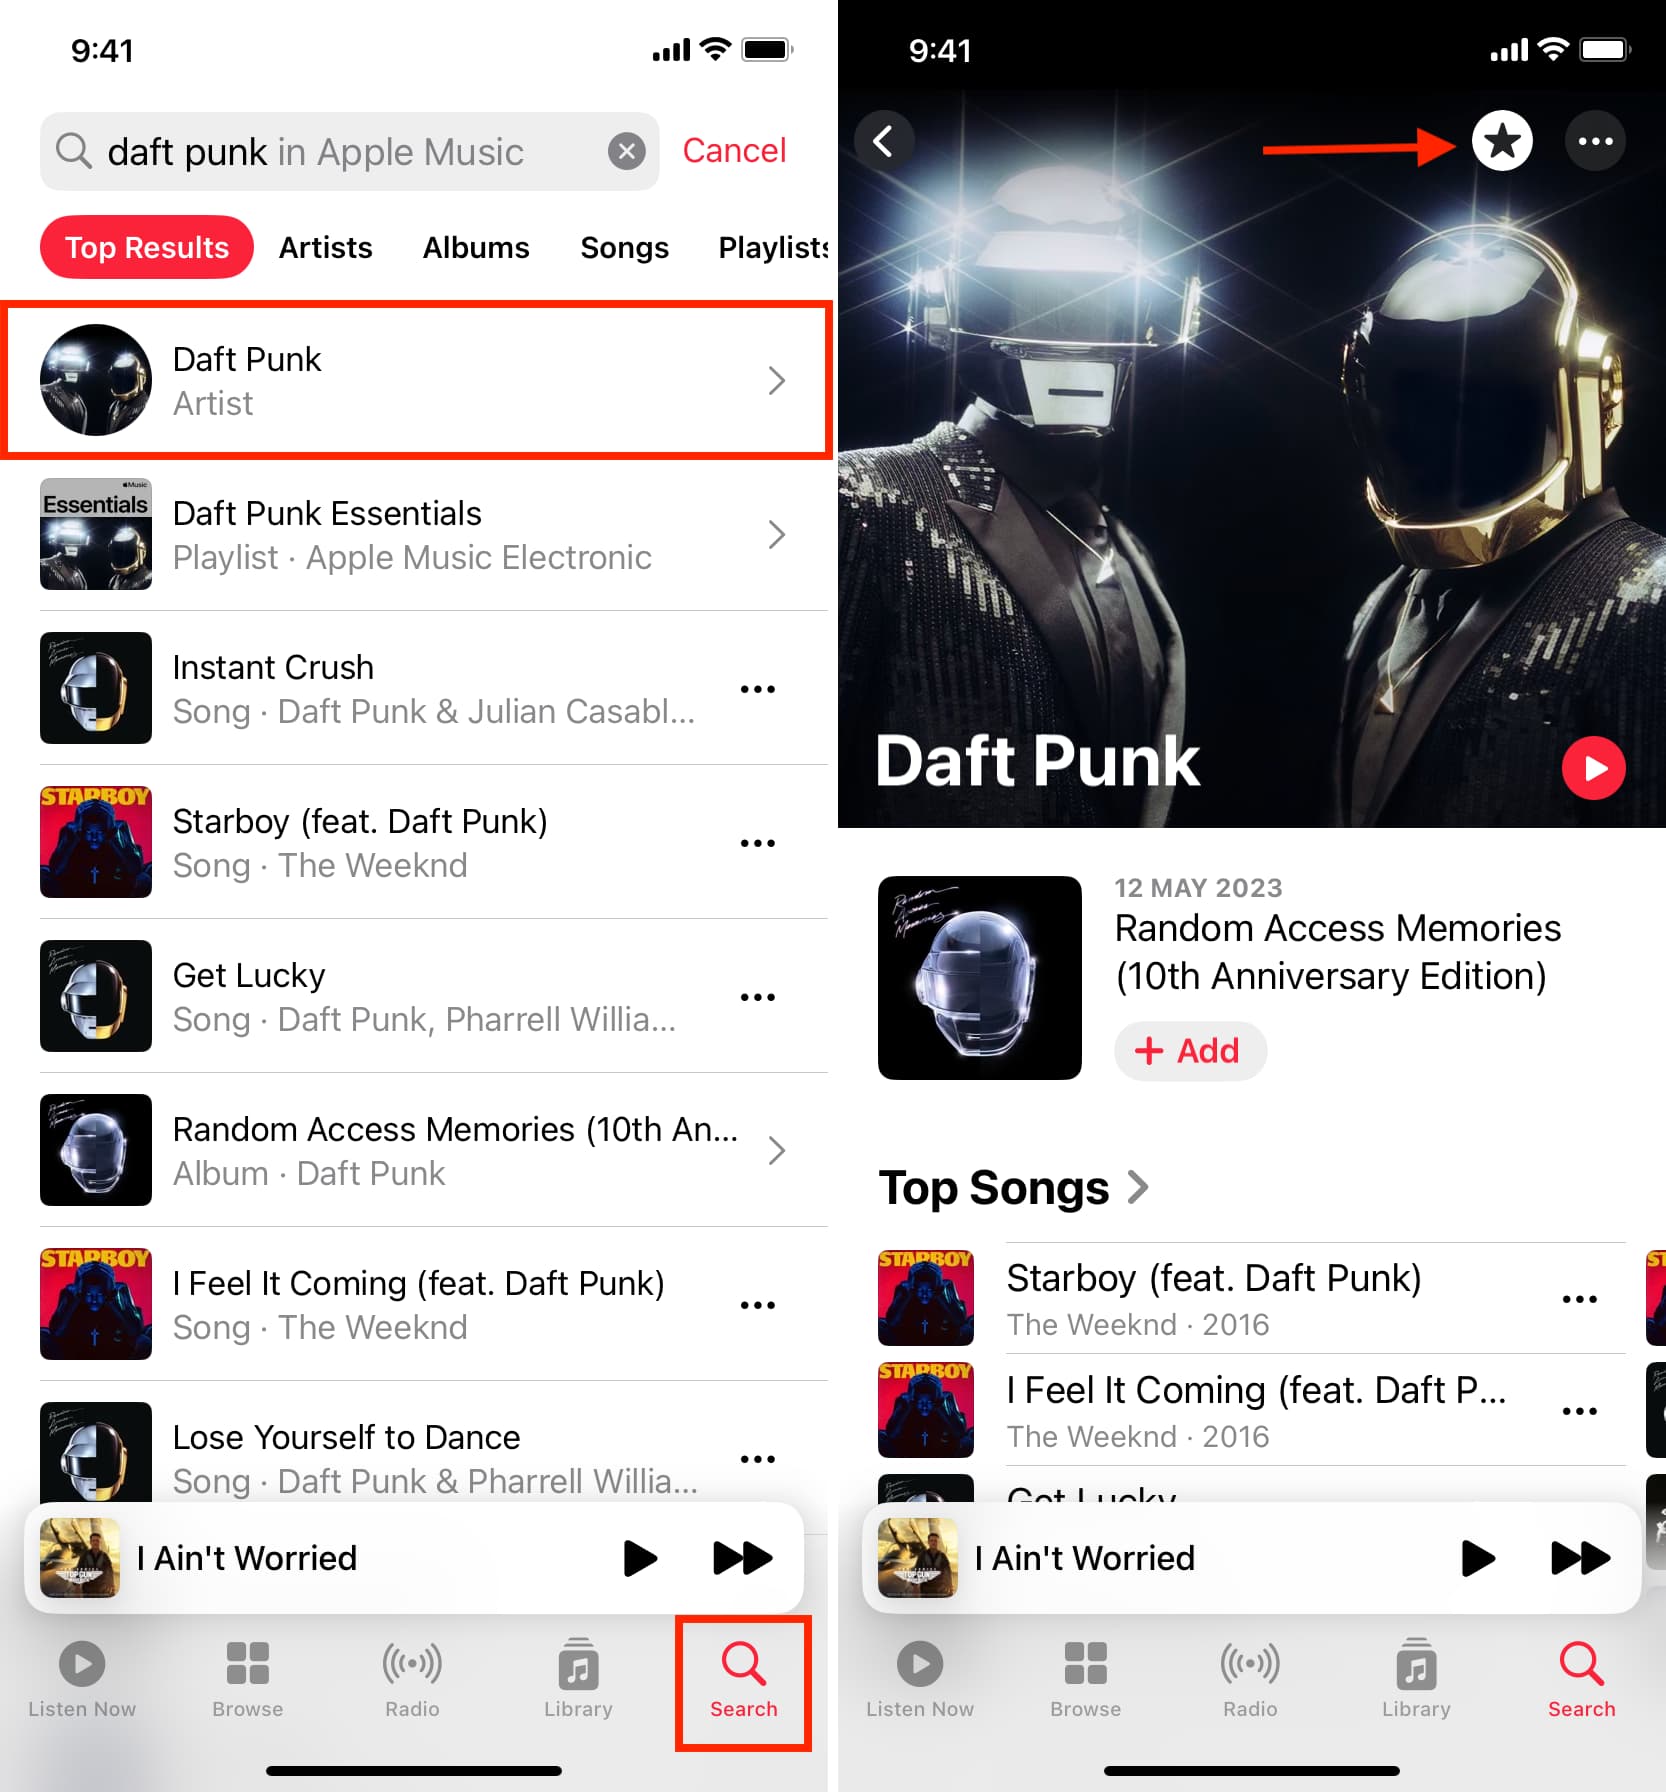 Mark an artist as favorite in Apple Music app on iPhone